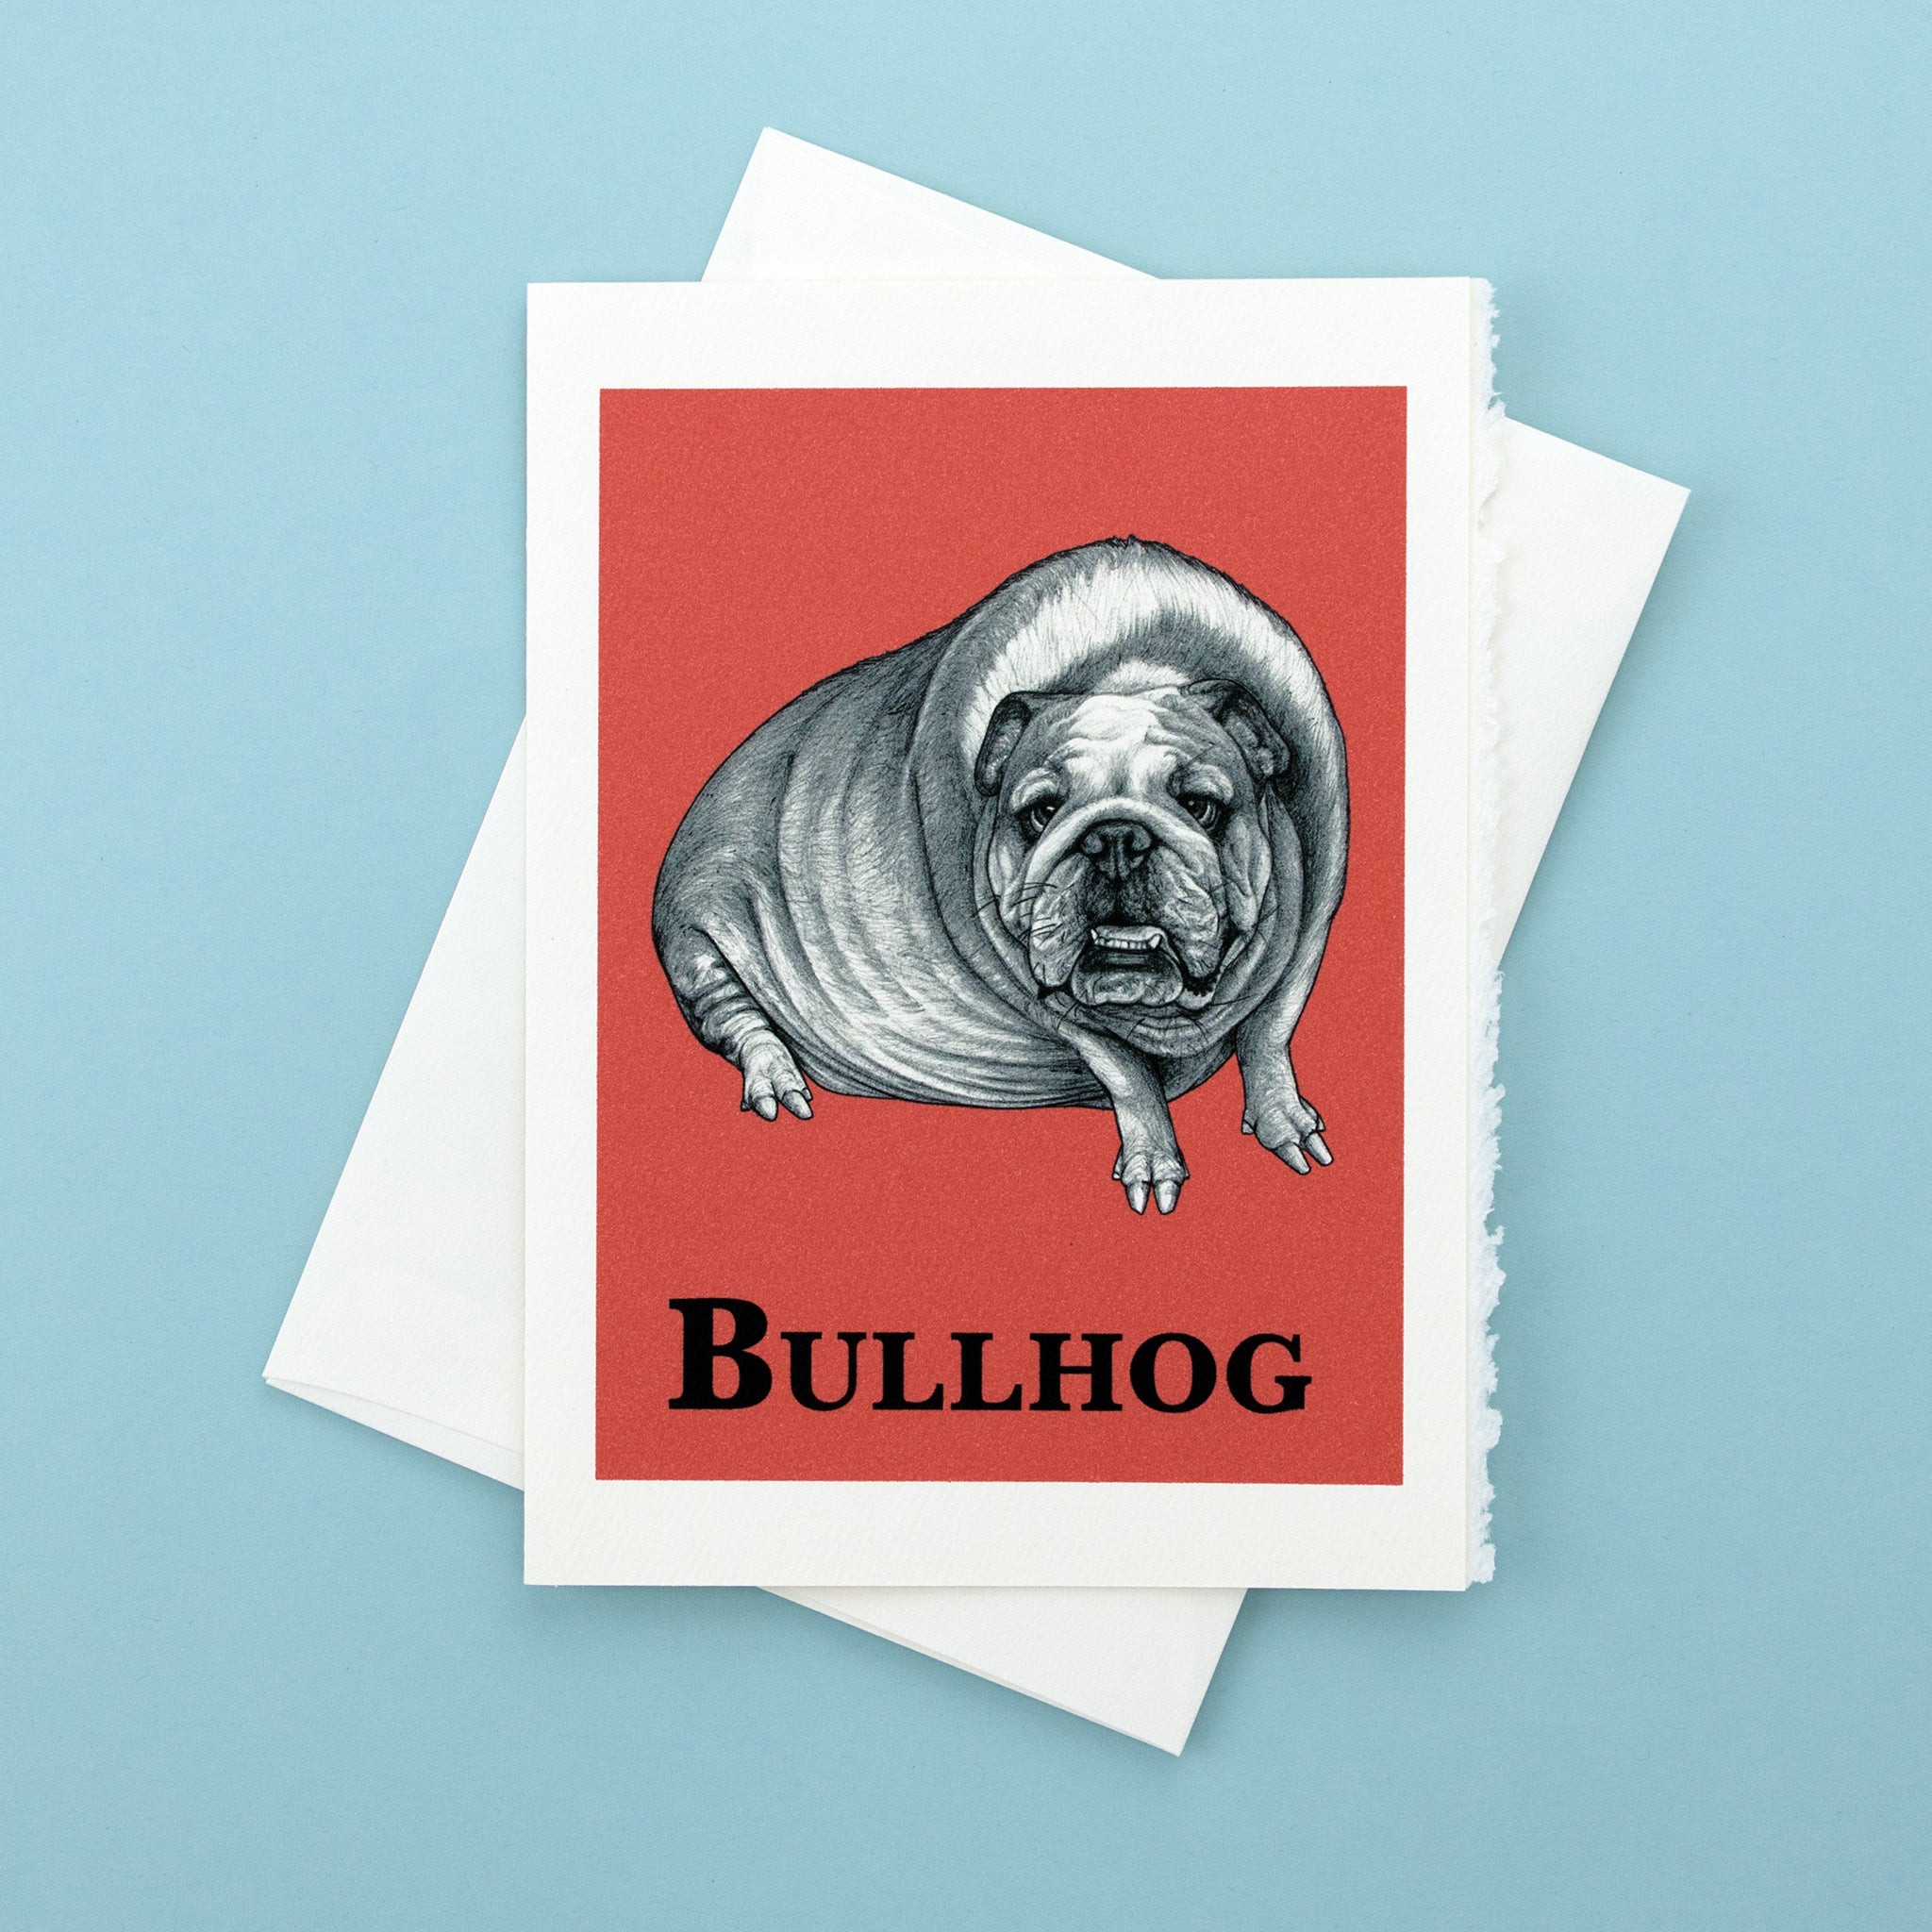 Bullhog 5x7" Greeting Card